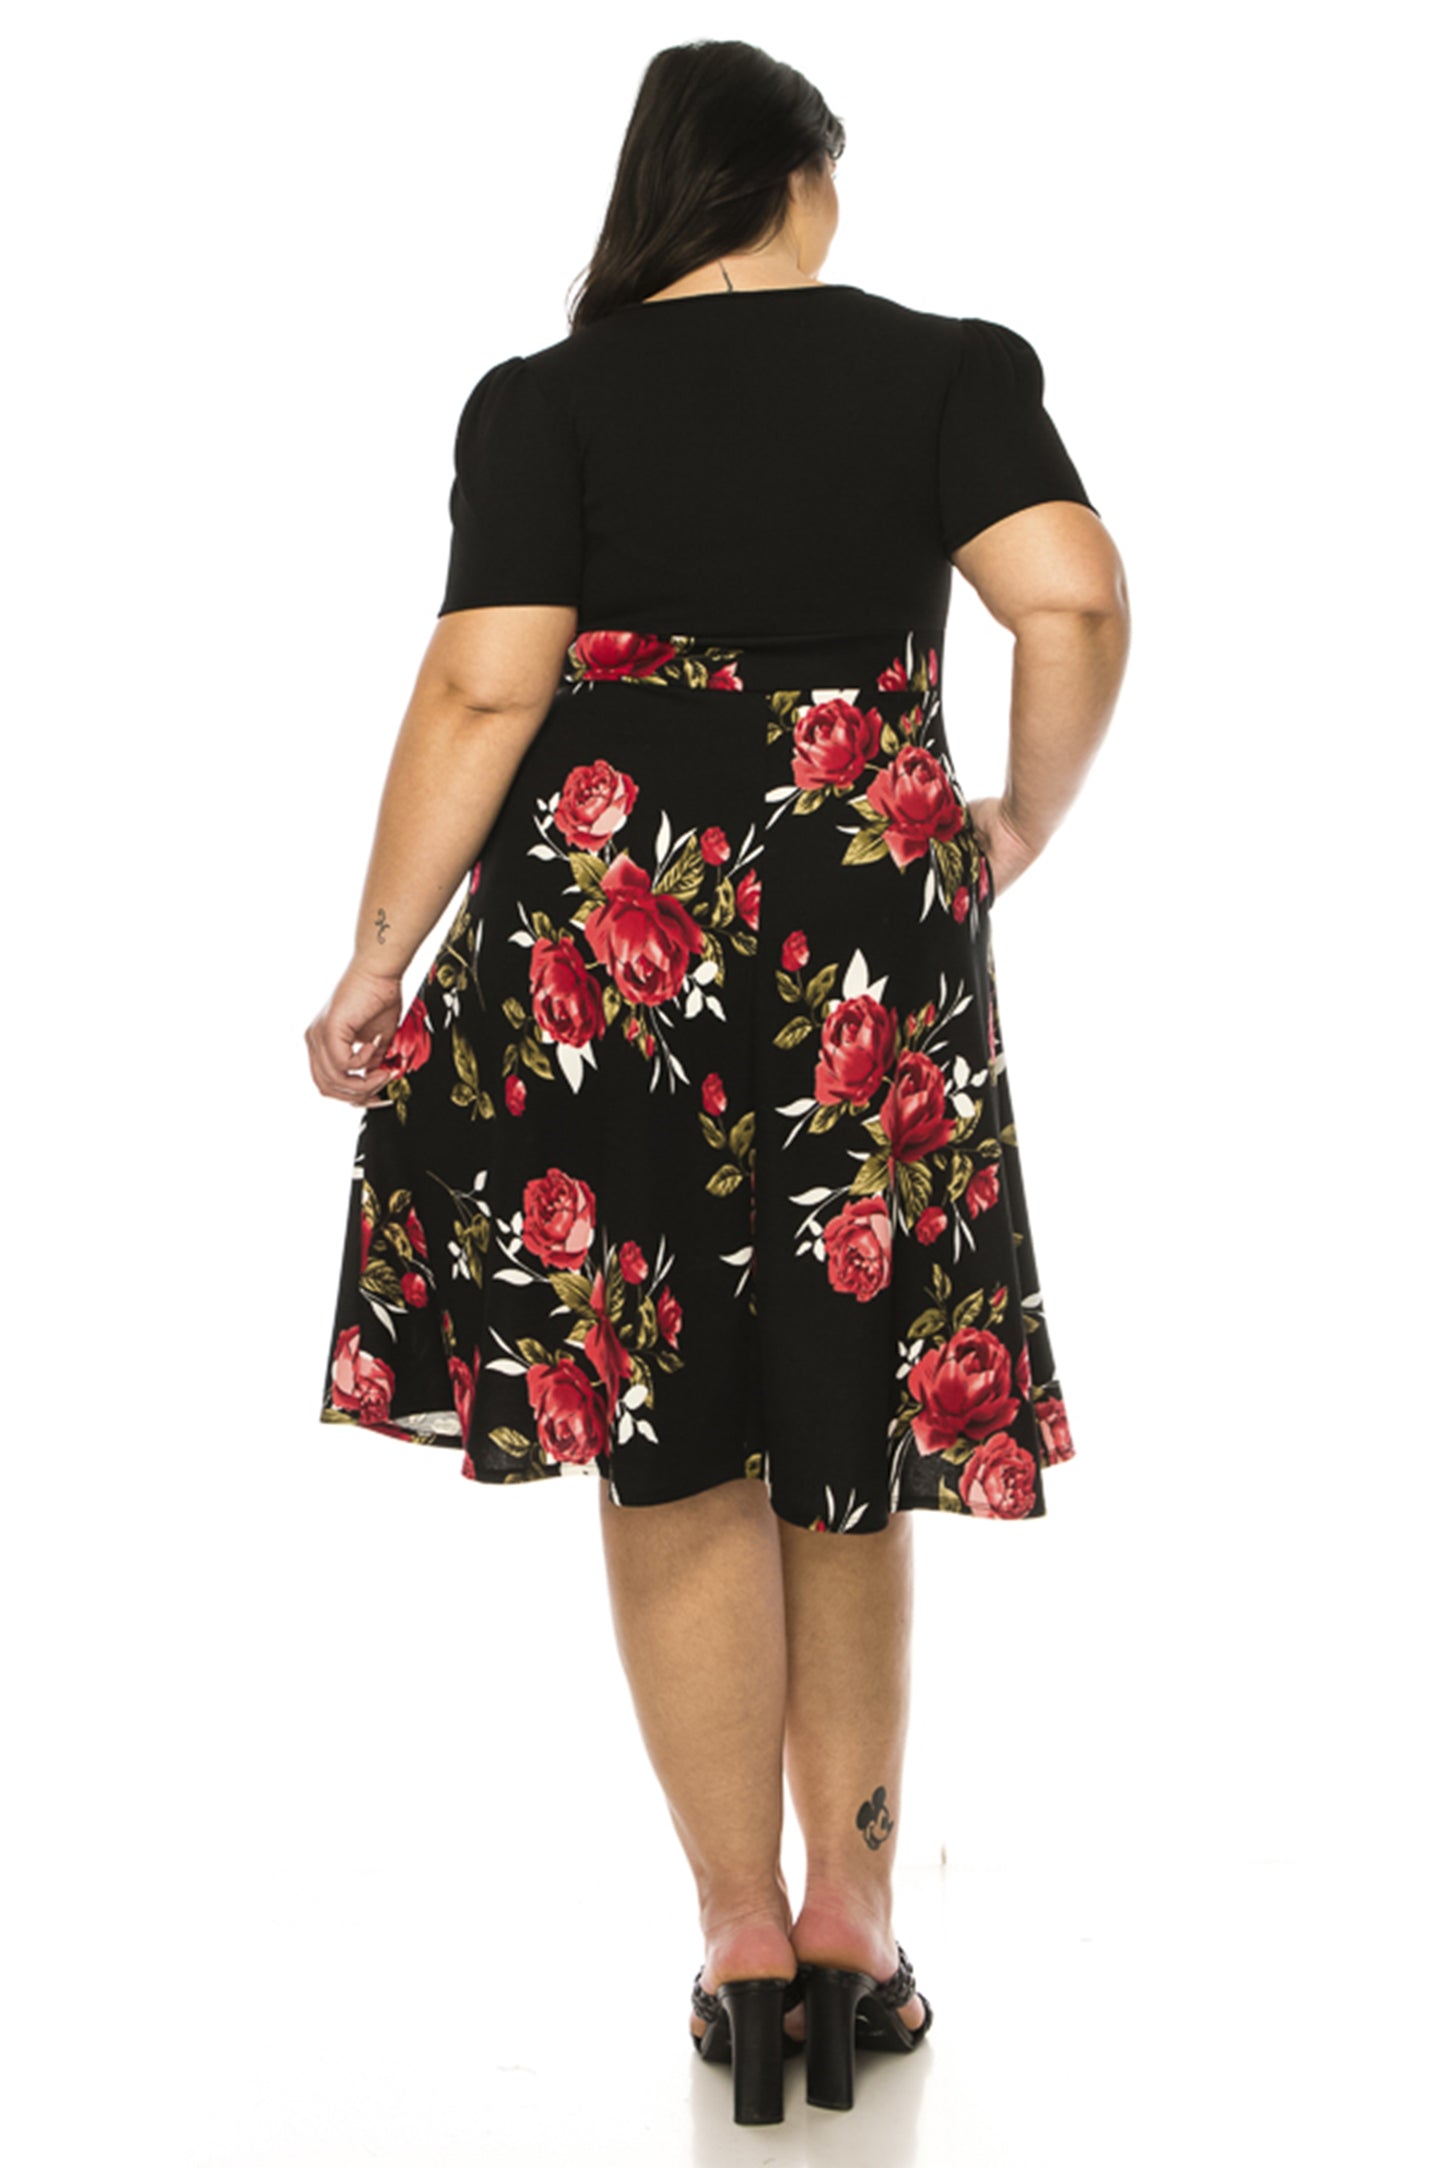 Women's Plus Size Knee-length Color Block Dress with Pockets